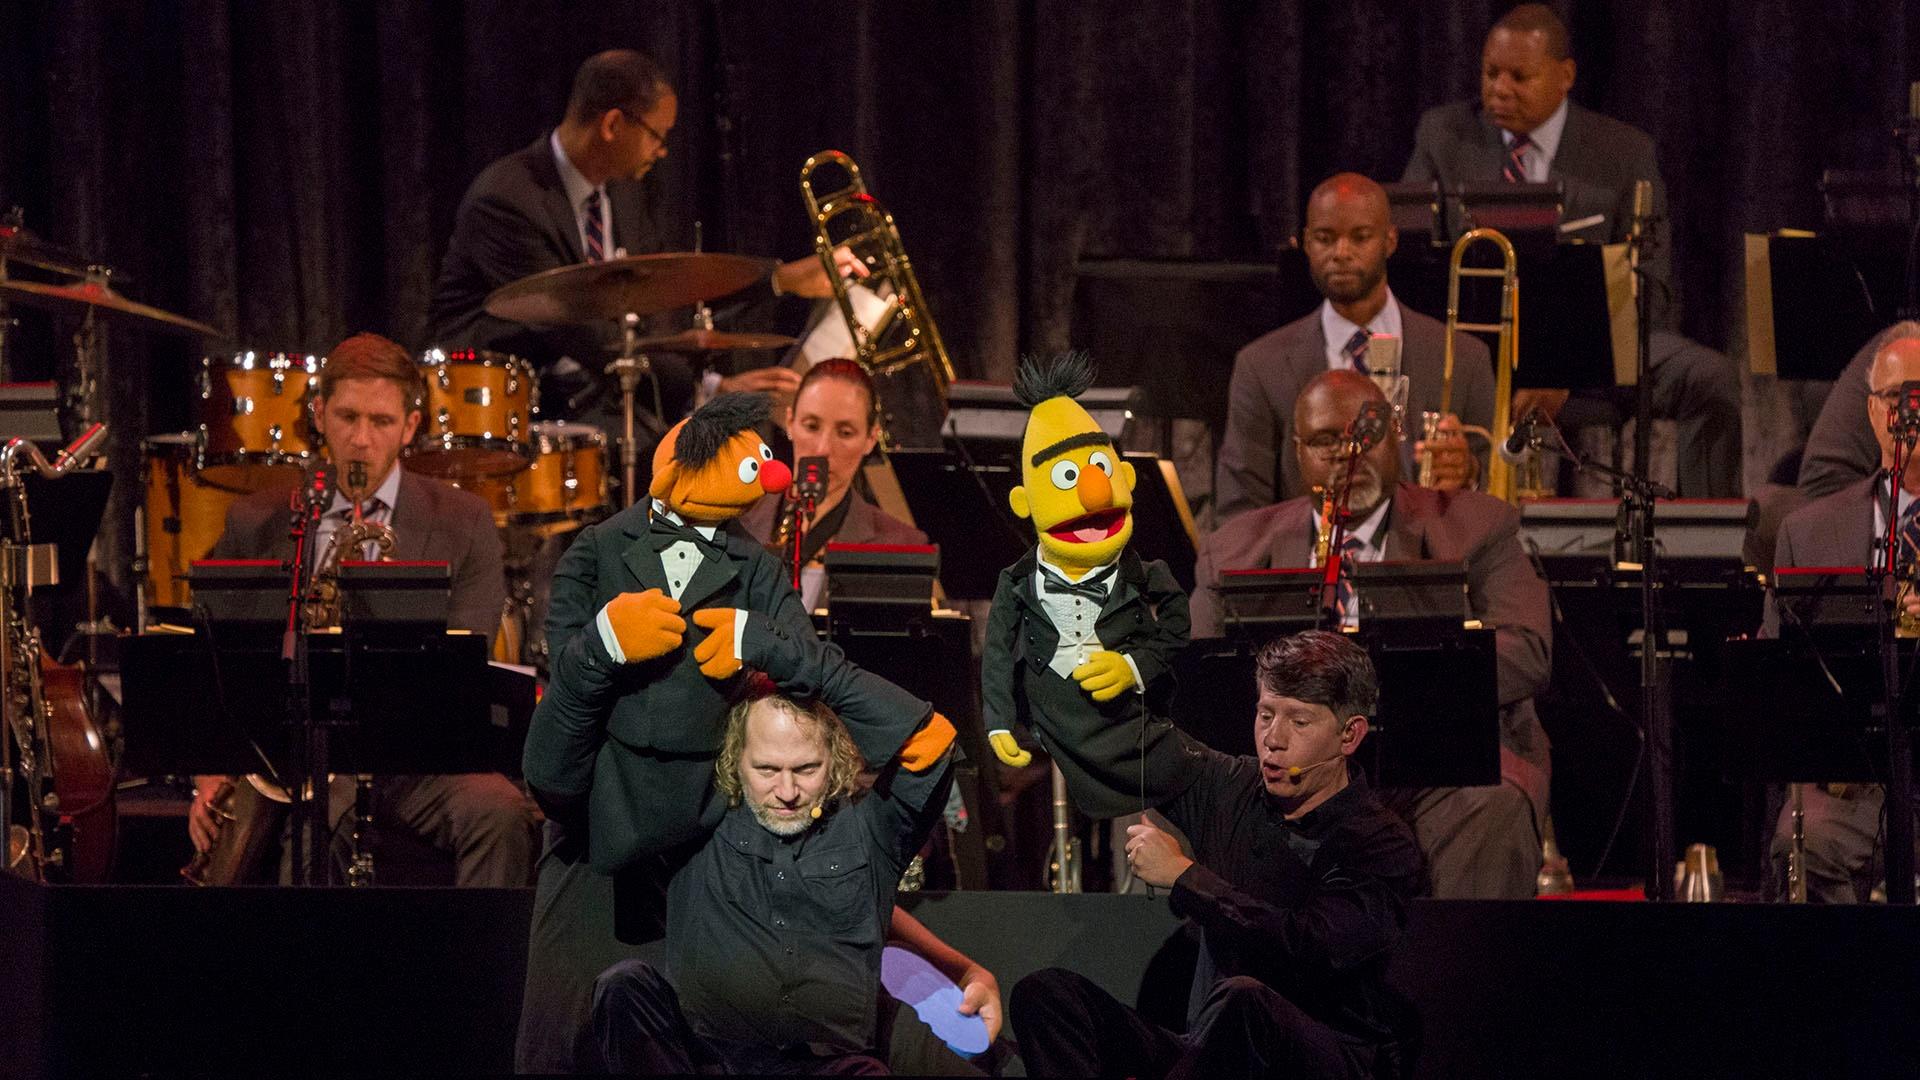 Image of Bert and Ernie in formalwear hosting "A Swingin' Sesame Street Celebration."